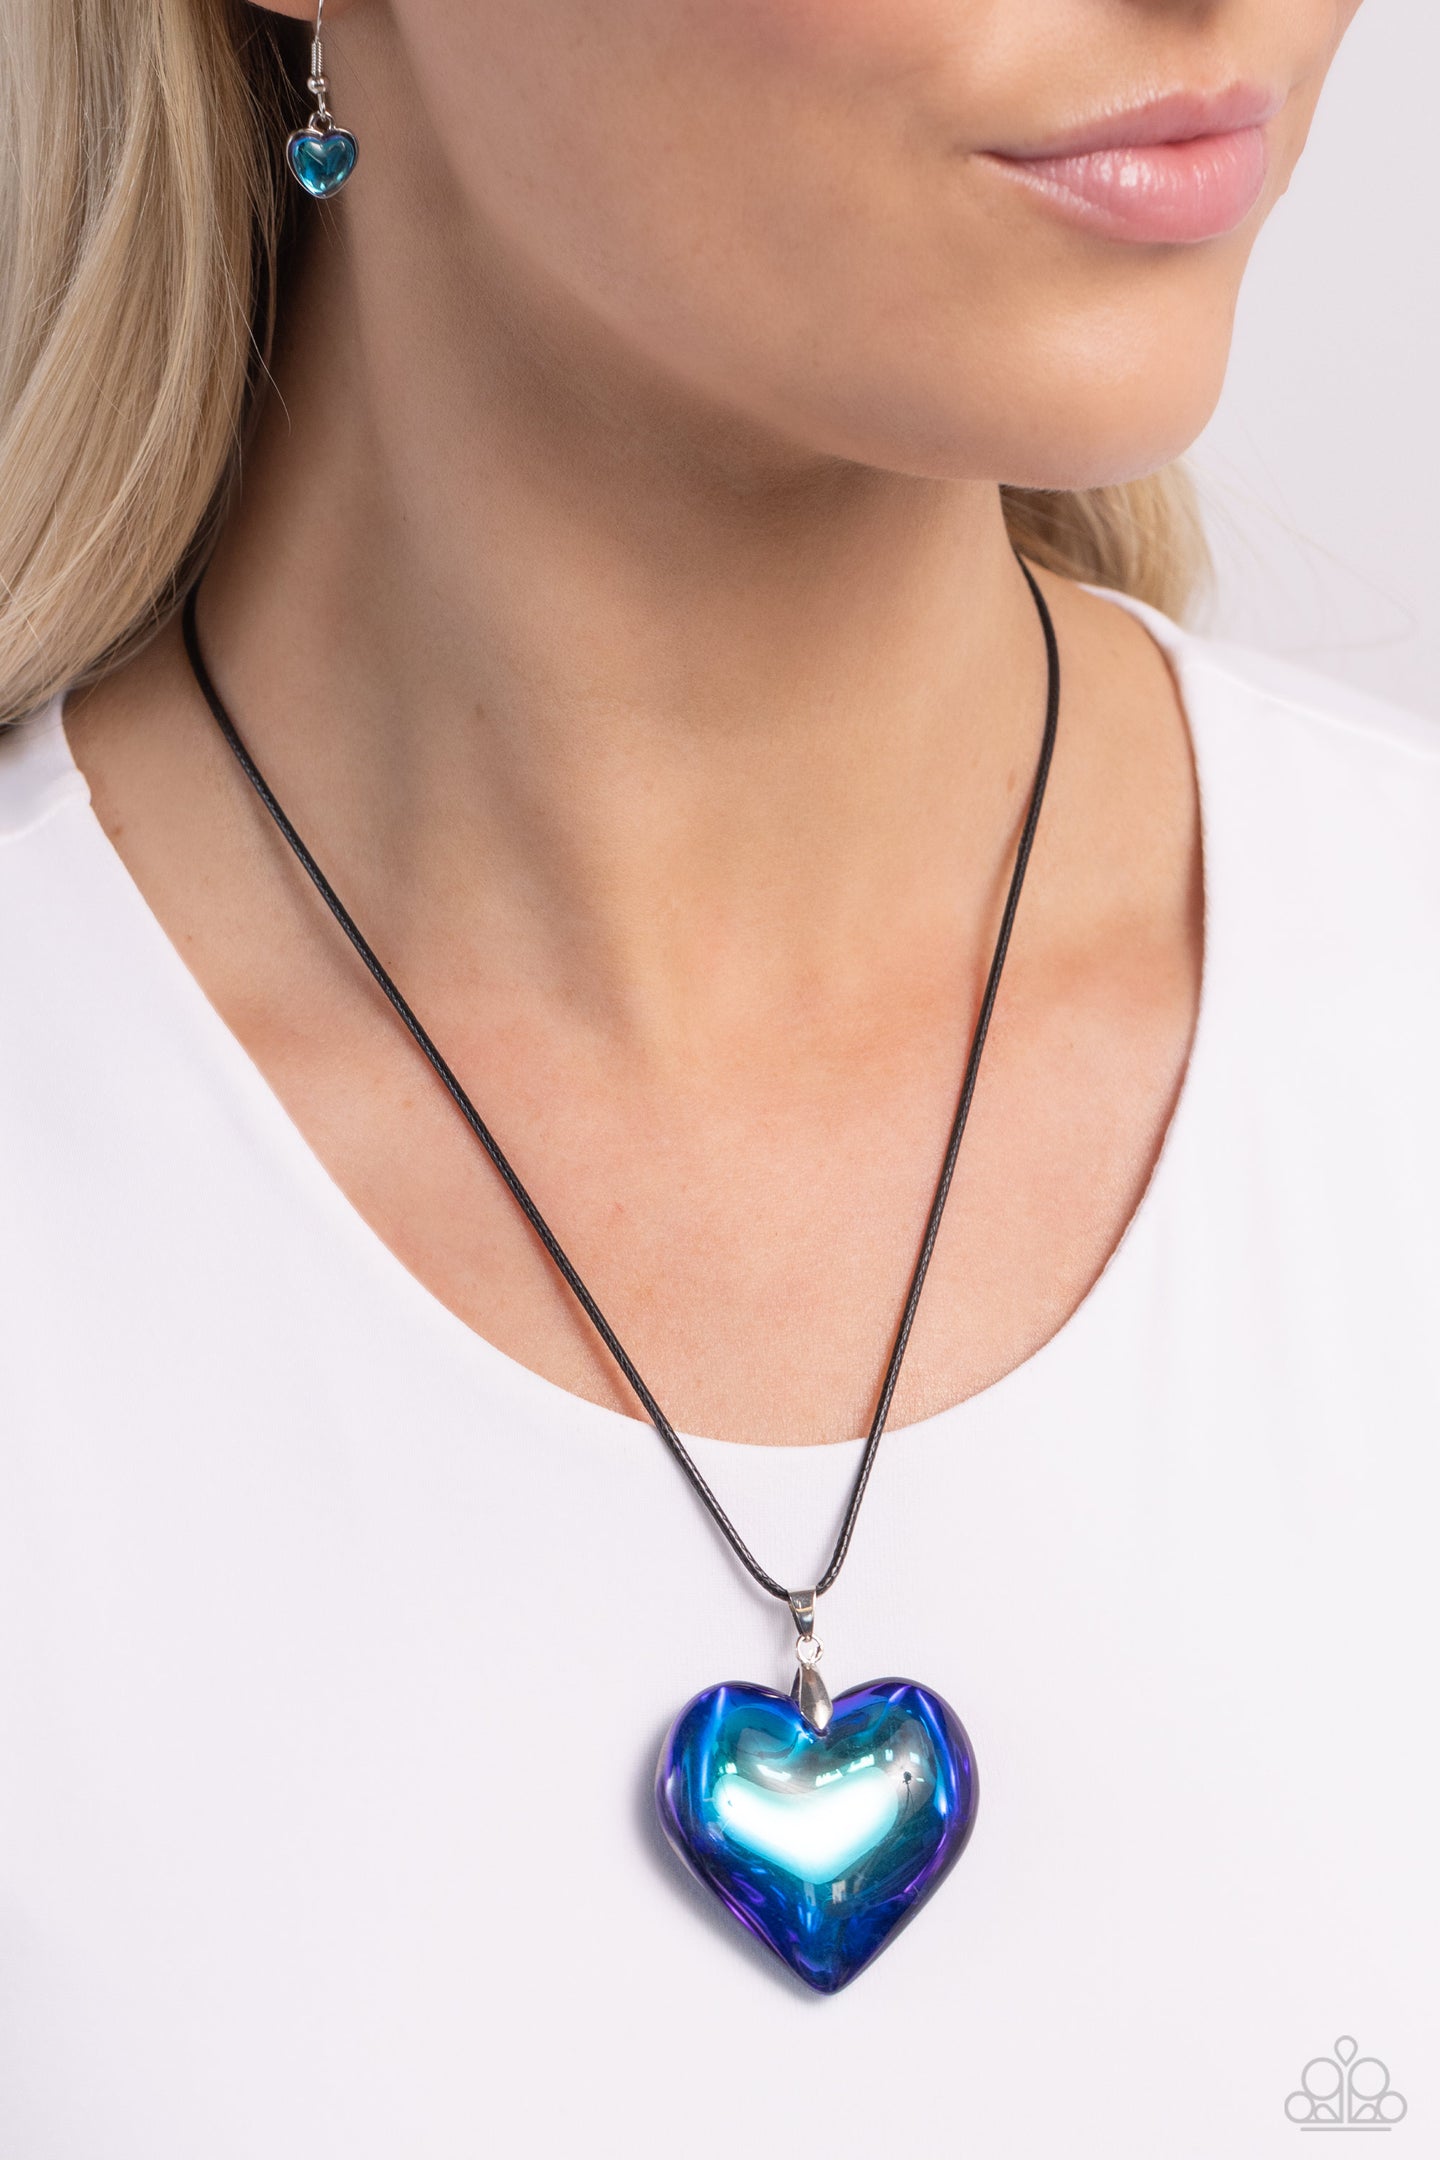 Seize the Simplicity - Blue necklace